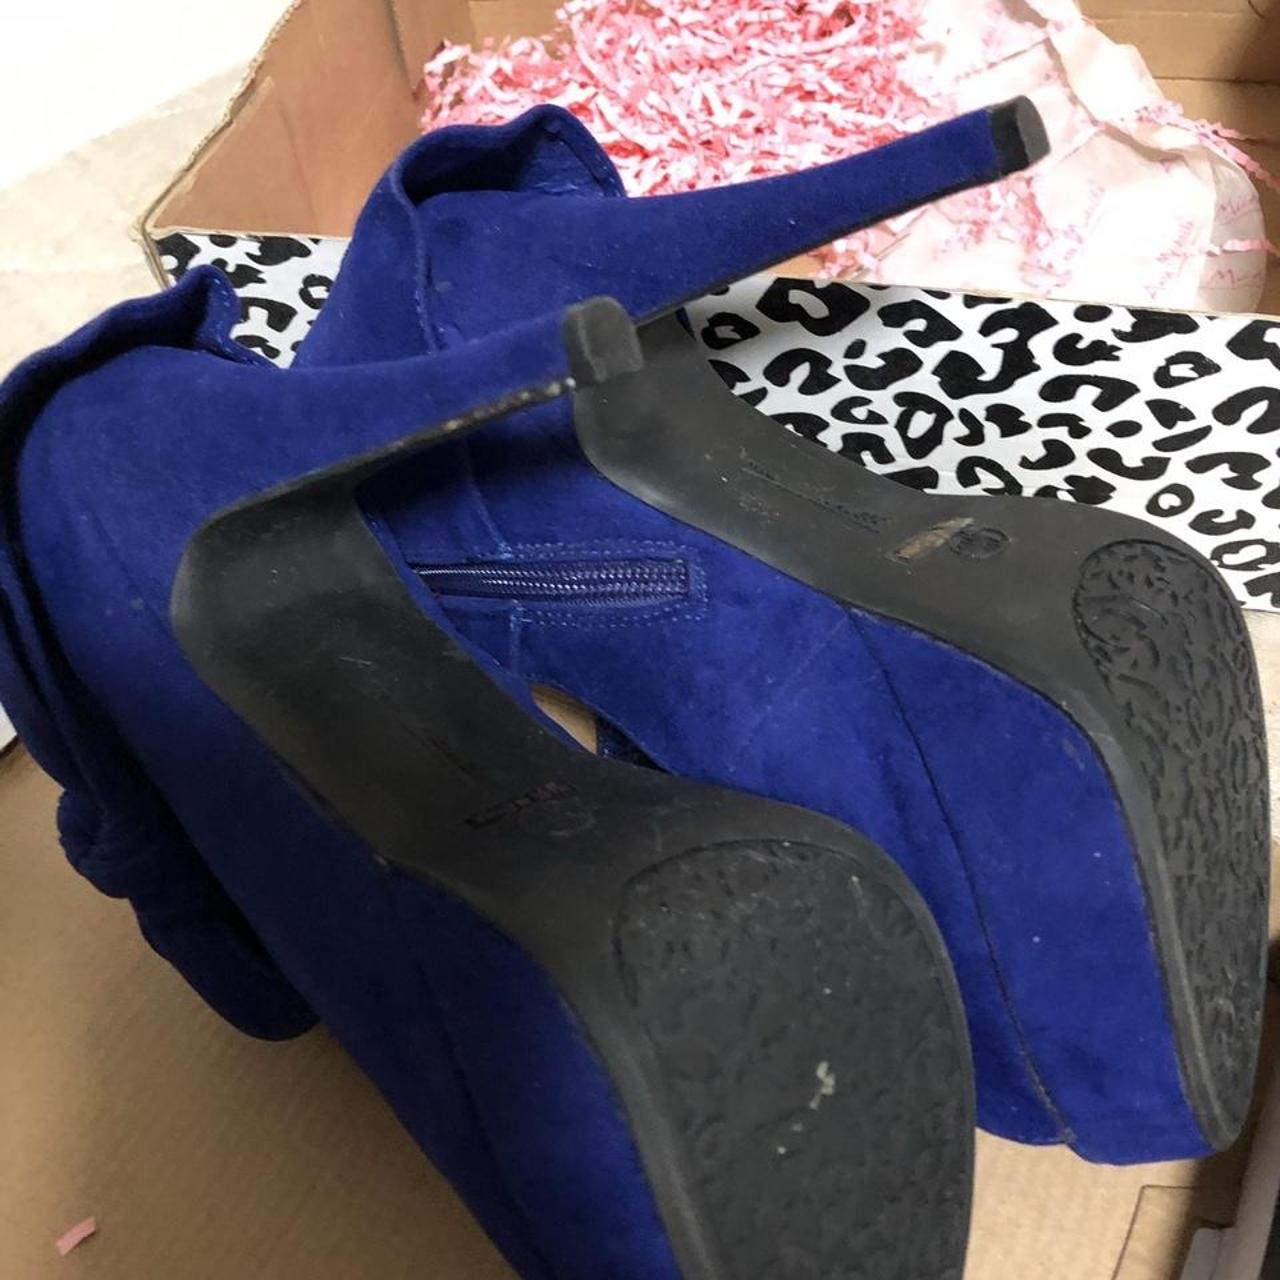 Product Image 3 - Royal blue bow platform heels